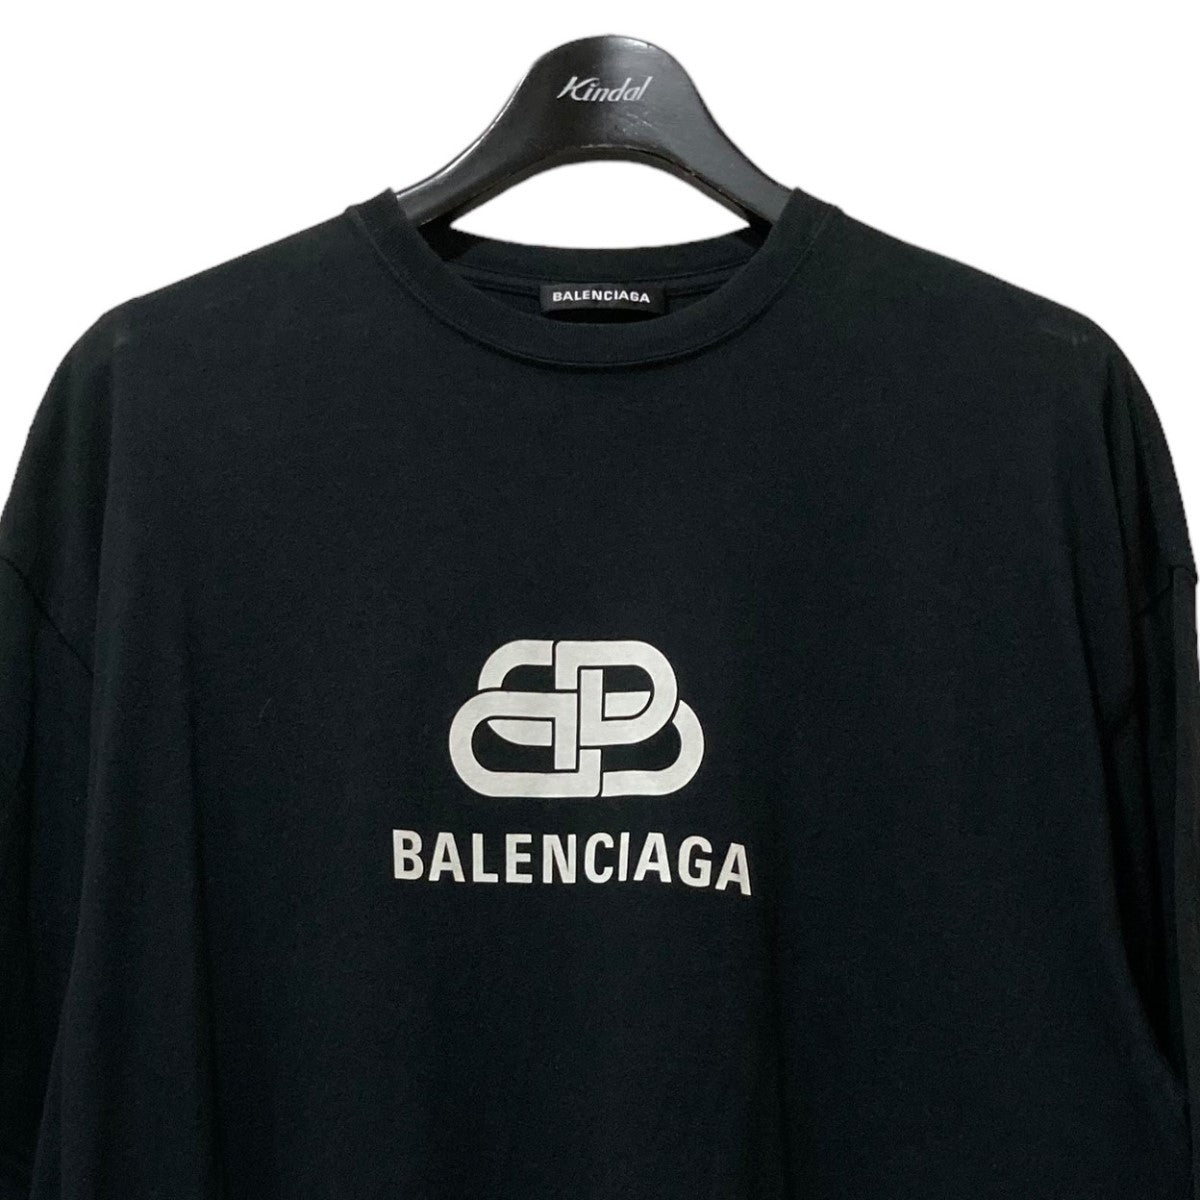 BALENCIAGA(バレンシアガ) BB Mode Crewneck Tee 半袖Tシャツ 570803 